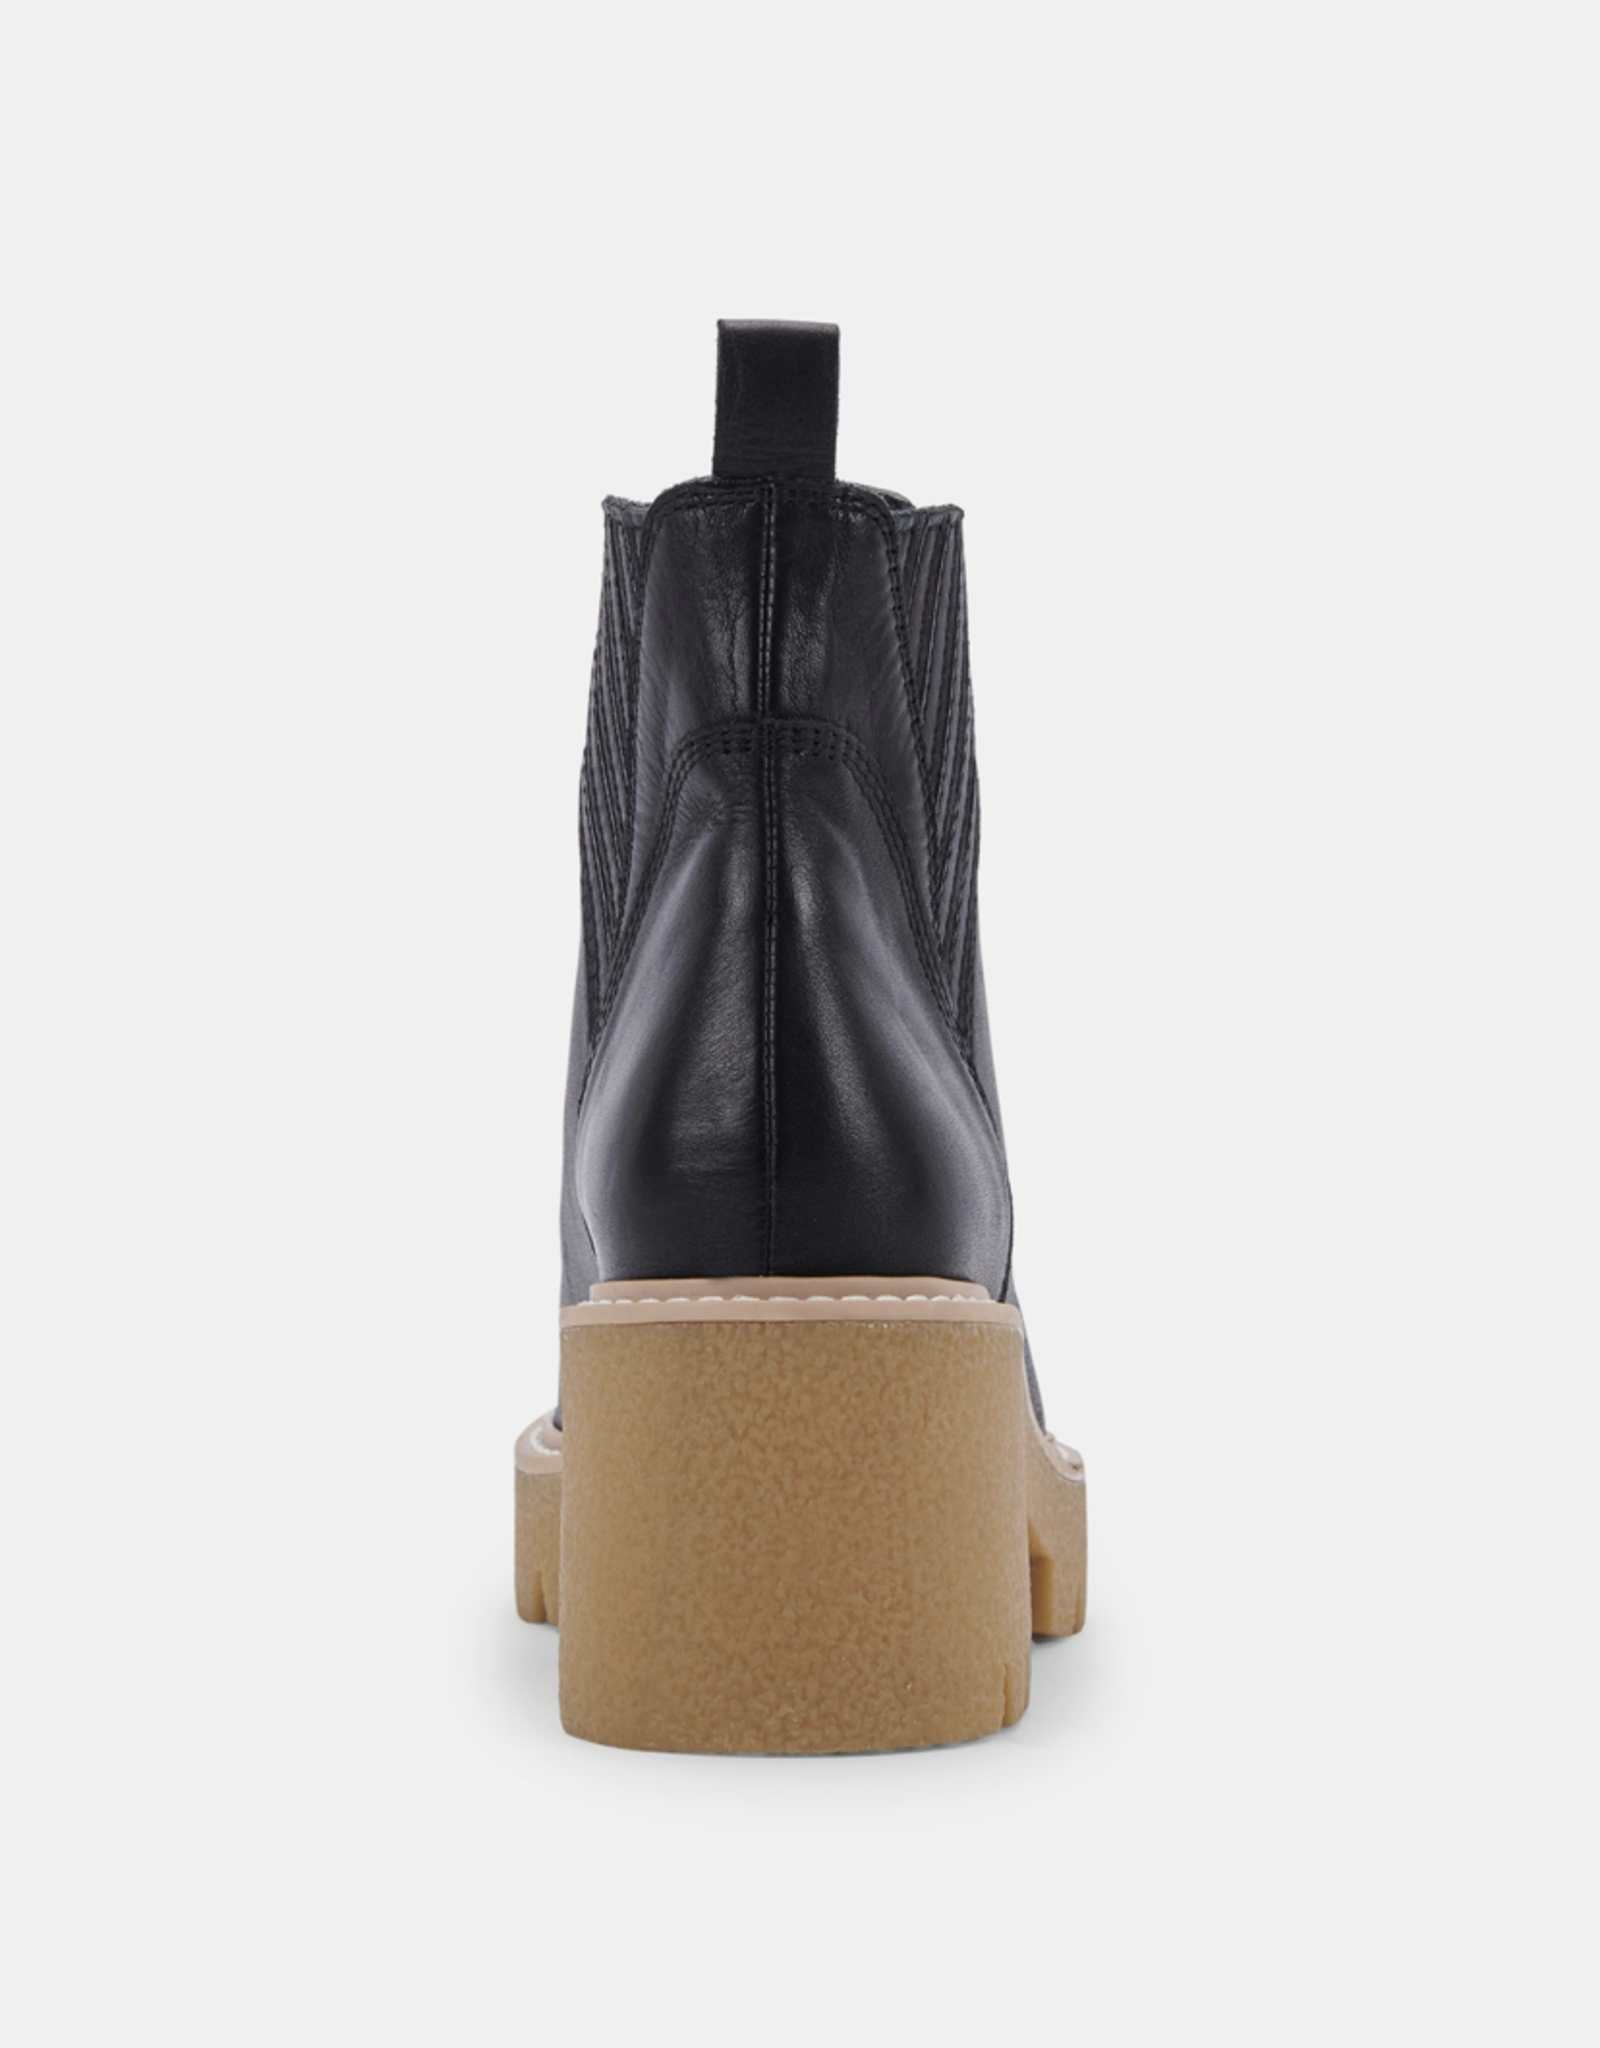 Dolce Vita Harte H20 Waterproof Leather Boot